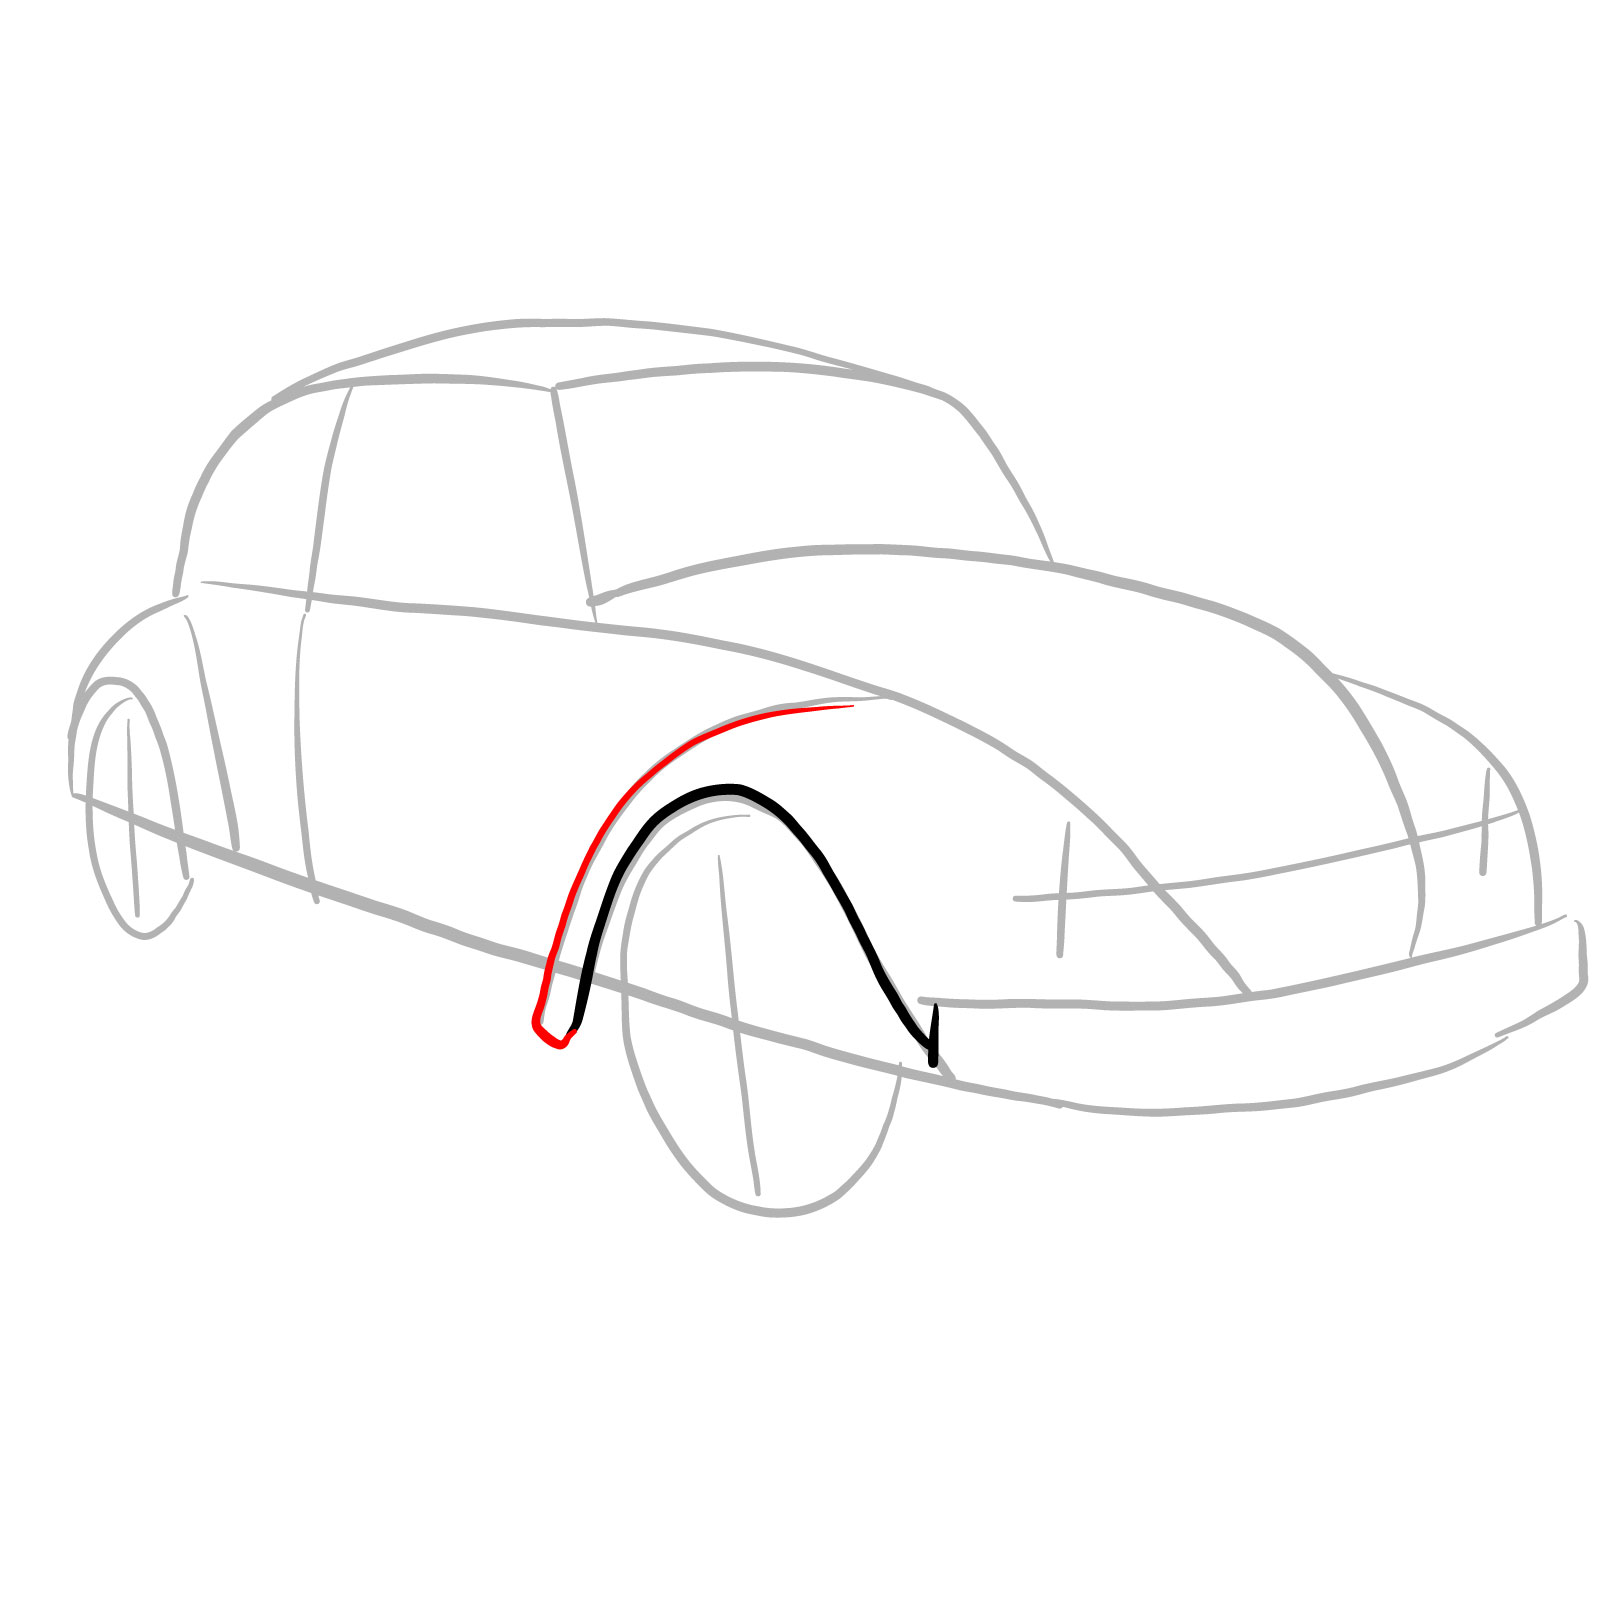 How to draw Volkswagen Beetle 1972 - step 05